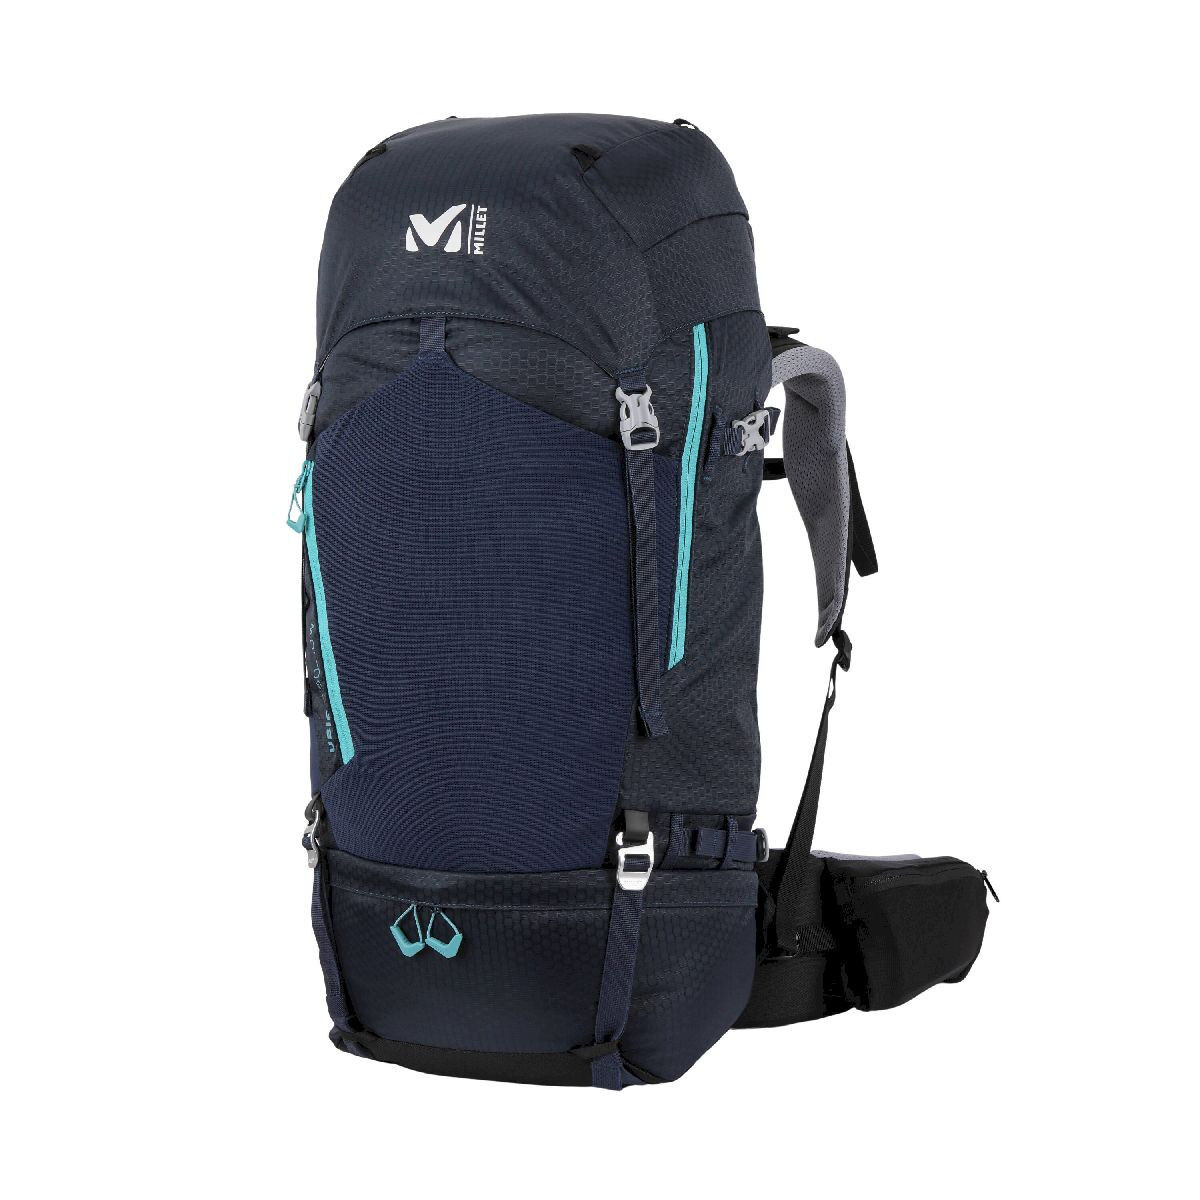 Millet Ubic 50+10 - Hiking backpack - Women's